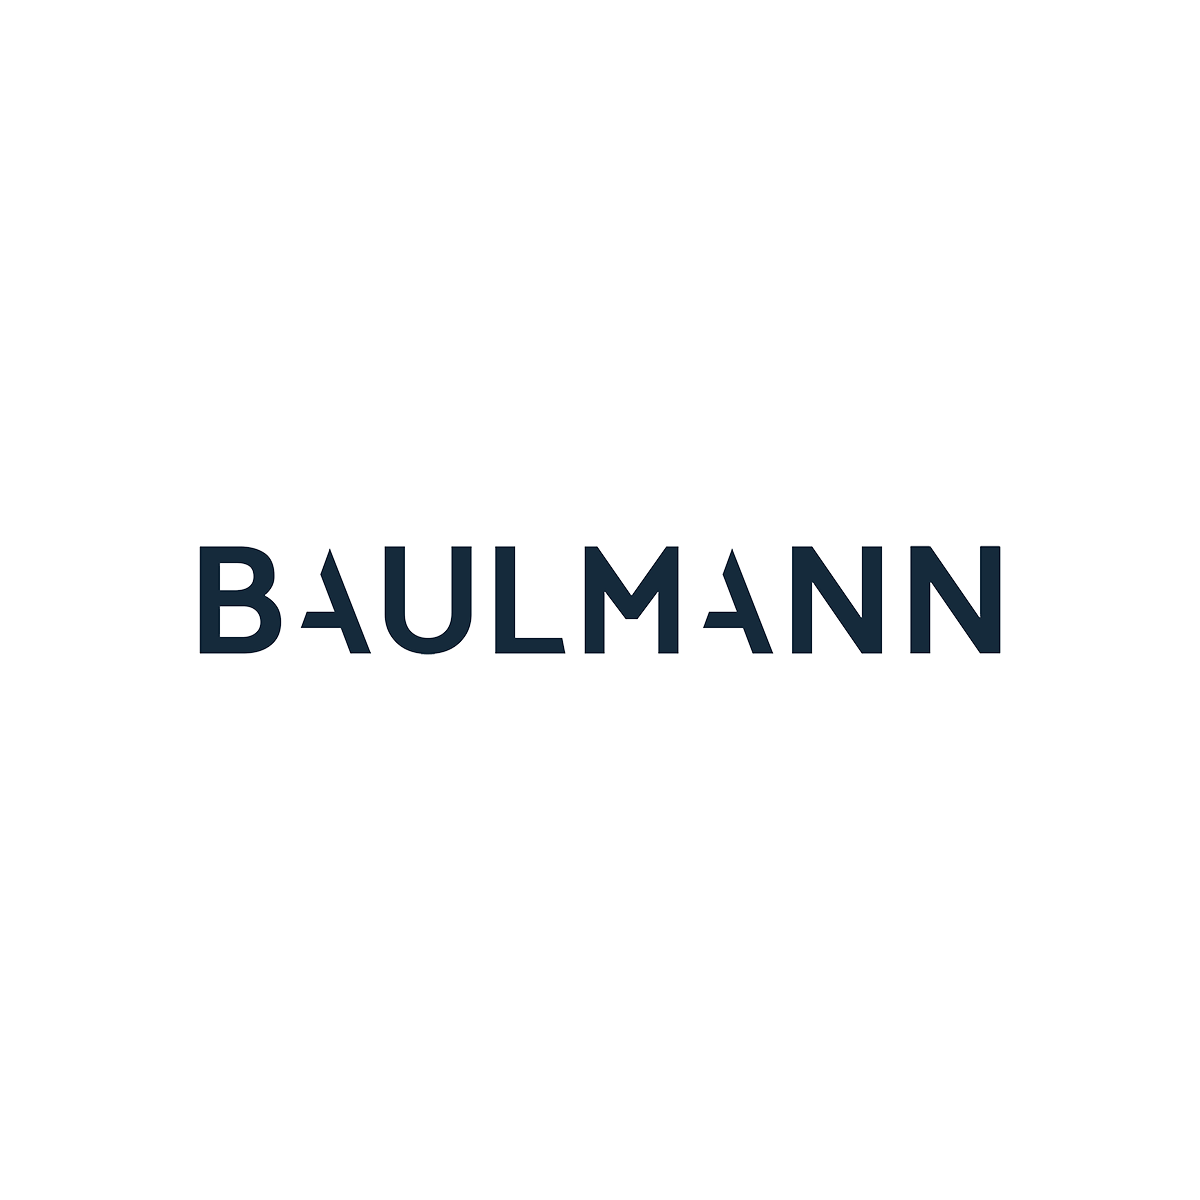 Baulmann